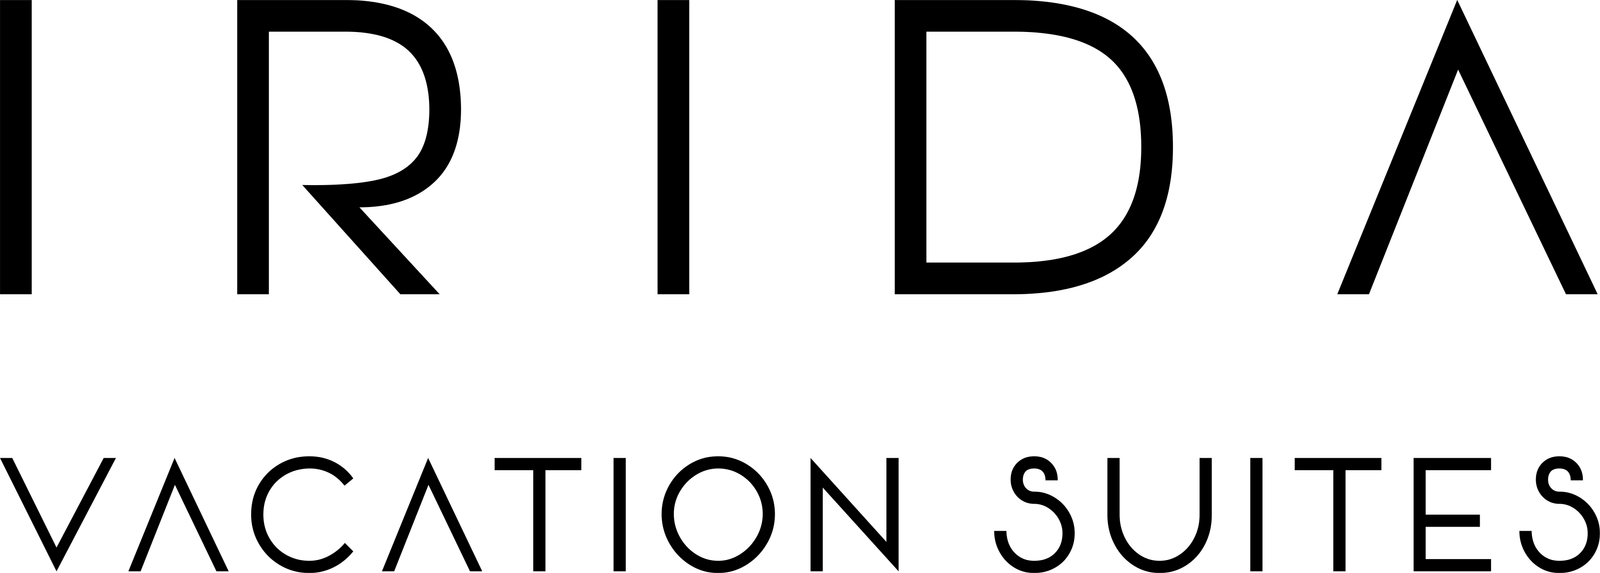 Irida Logo Black